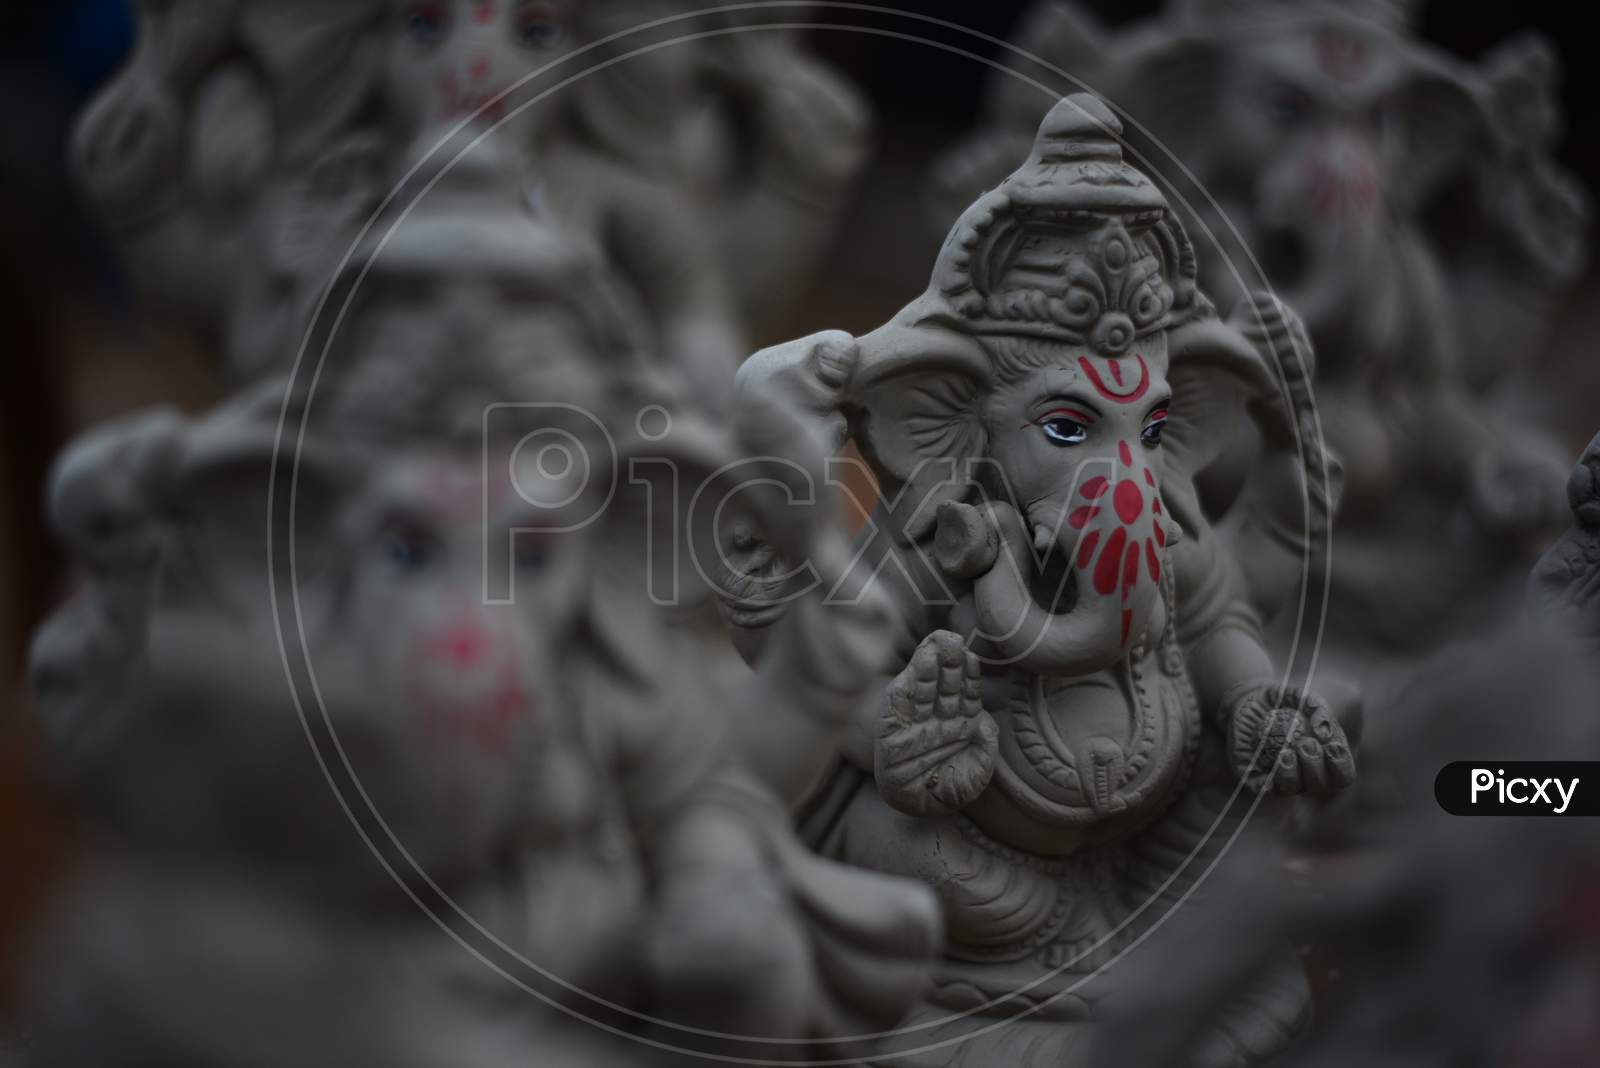 Hindu deity, Lord Ganesh Idols put up for sale ahead of Ganesh Chaturthi/ vinayaka chavithi festival in Hyderabad, August 21,2020.